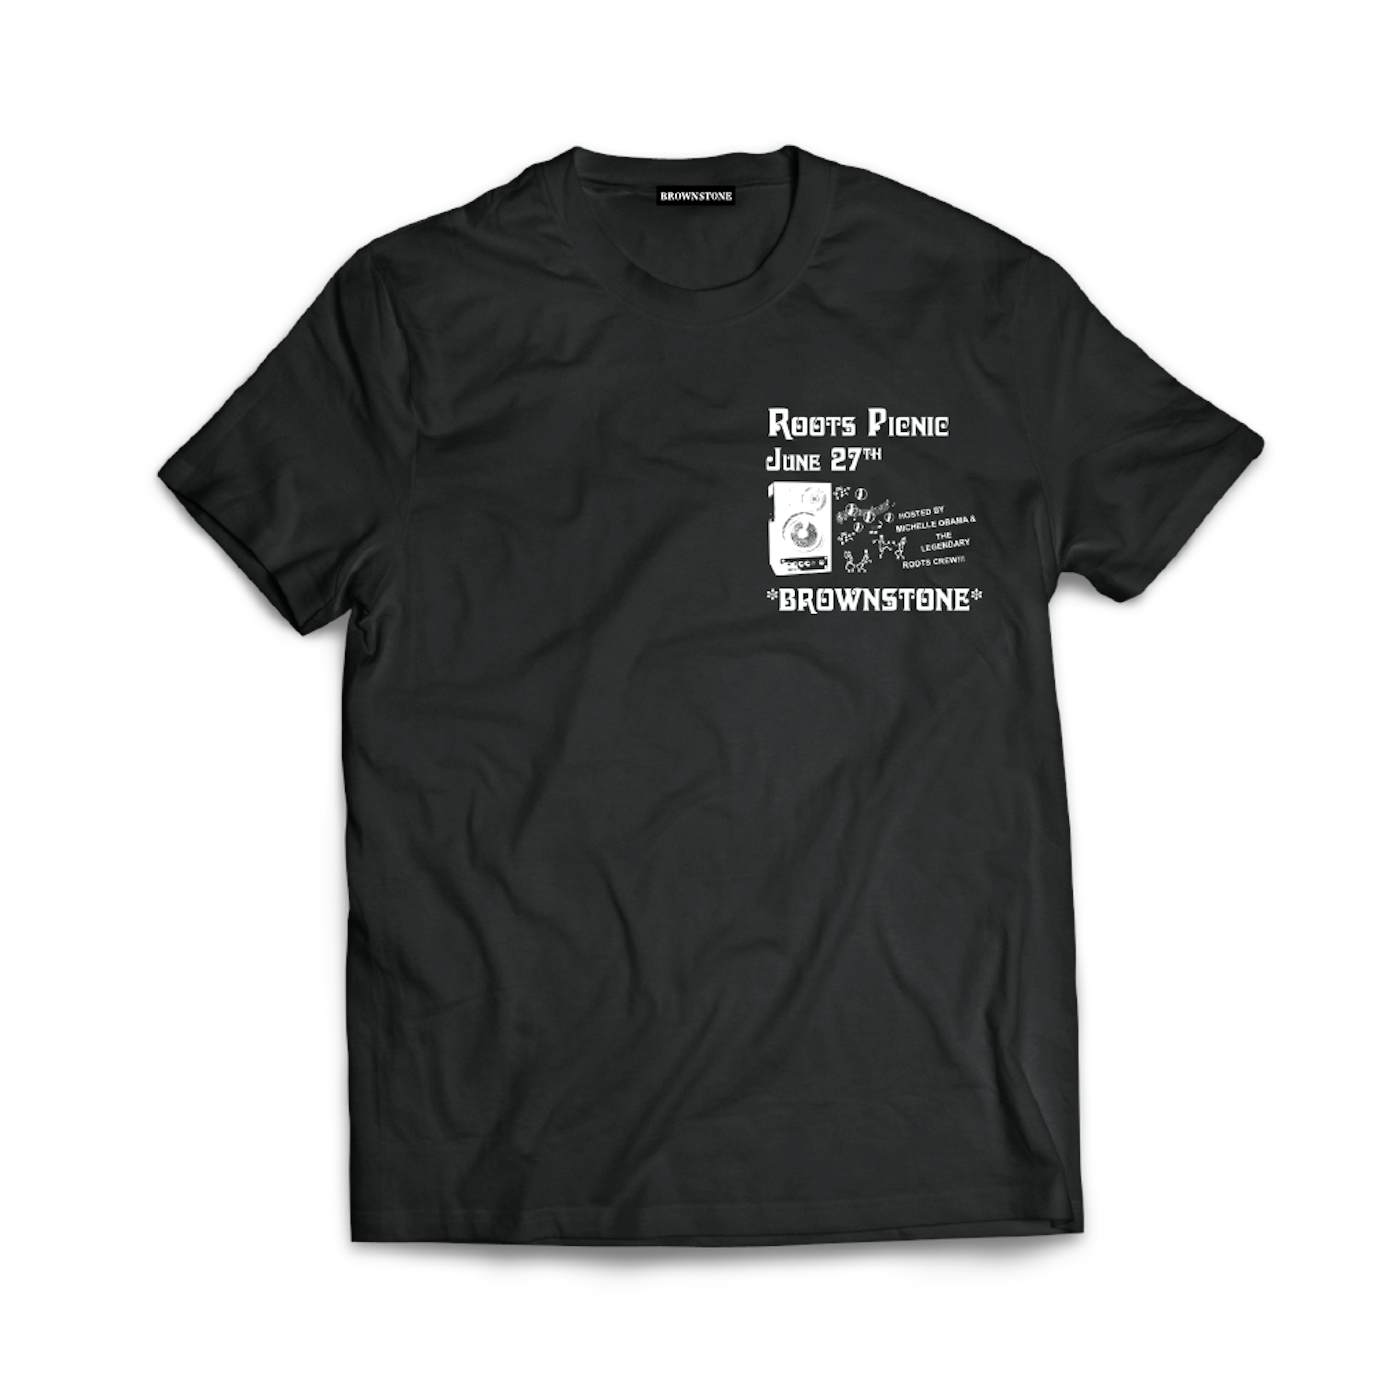 The Roots Picnic 2020 T-Shirt - Black